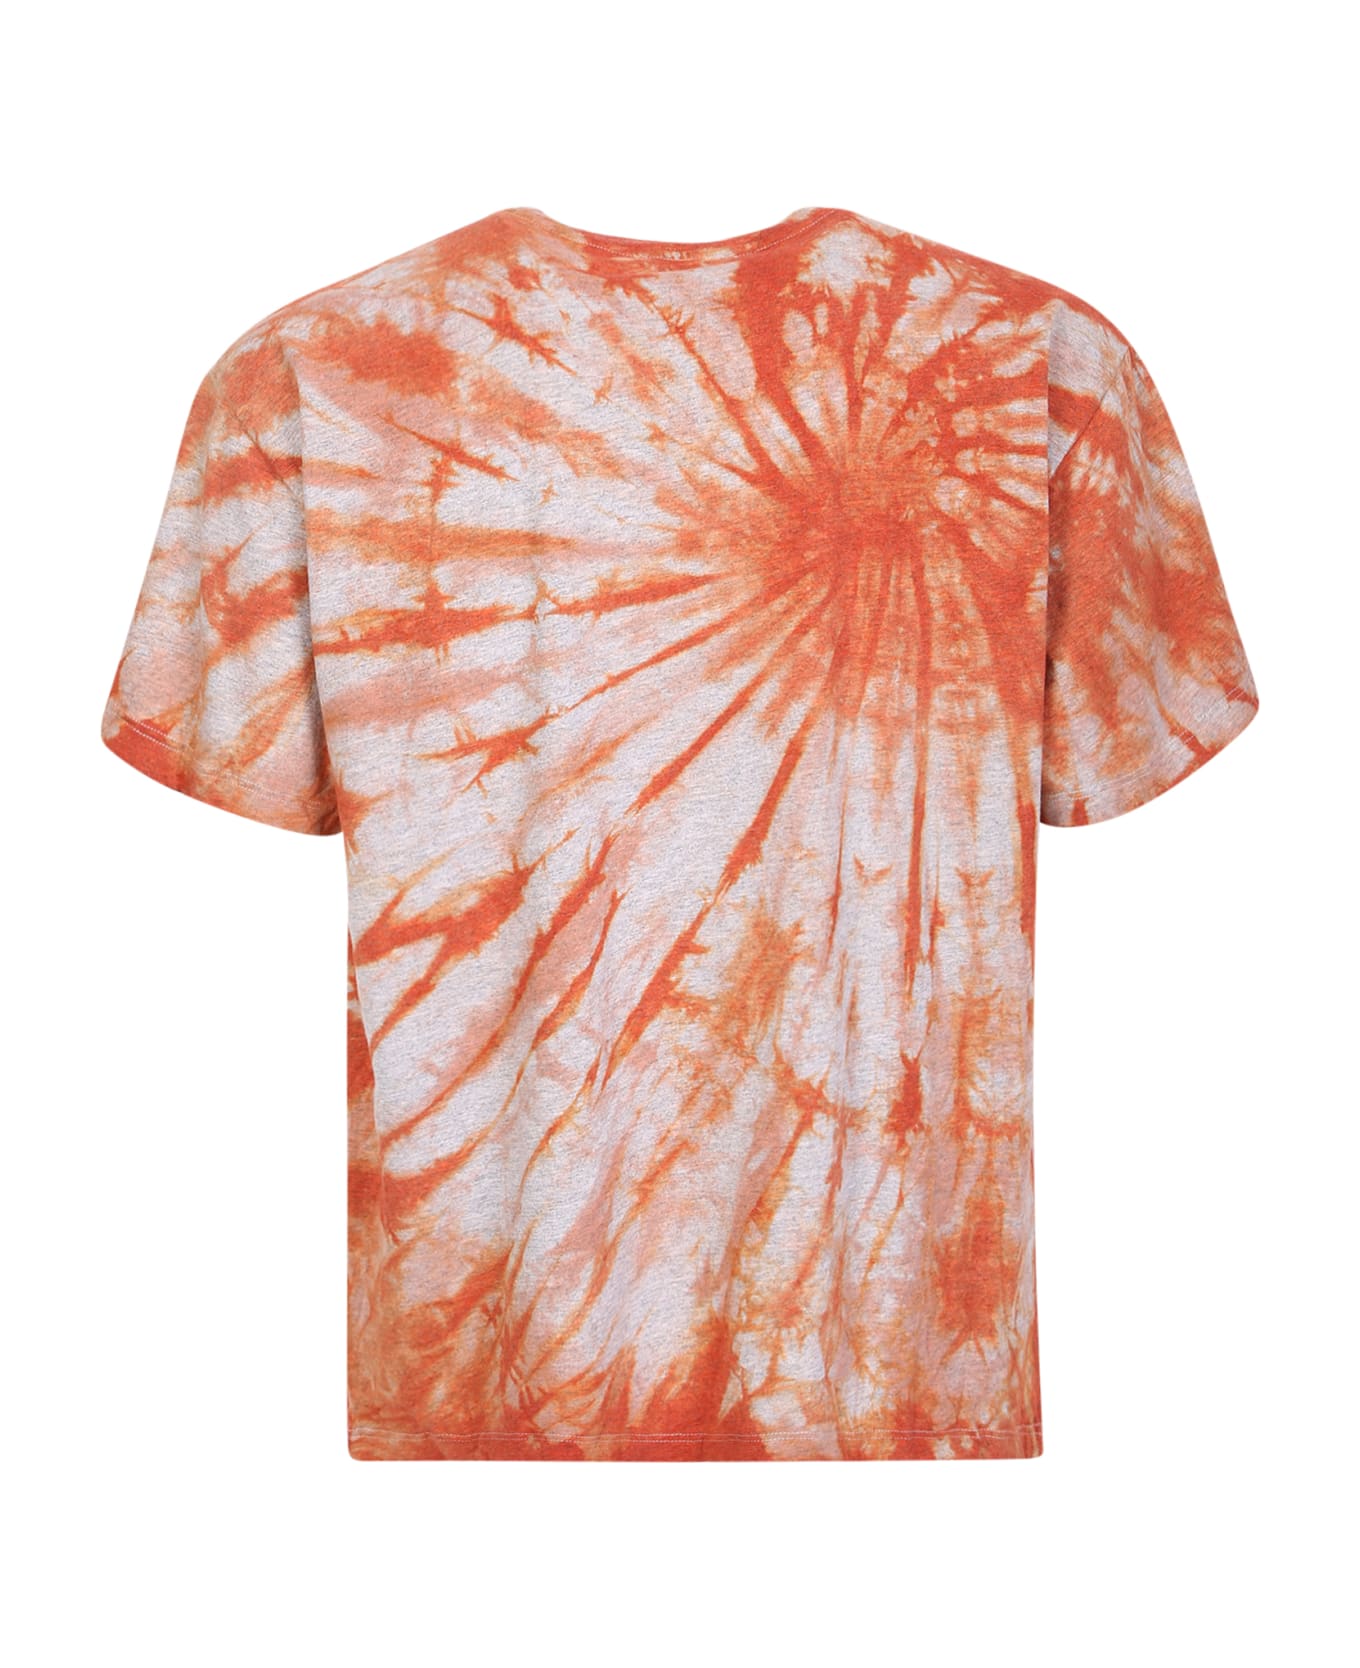 Aries Temple Tie Dye T-shirt - Orange